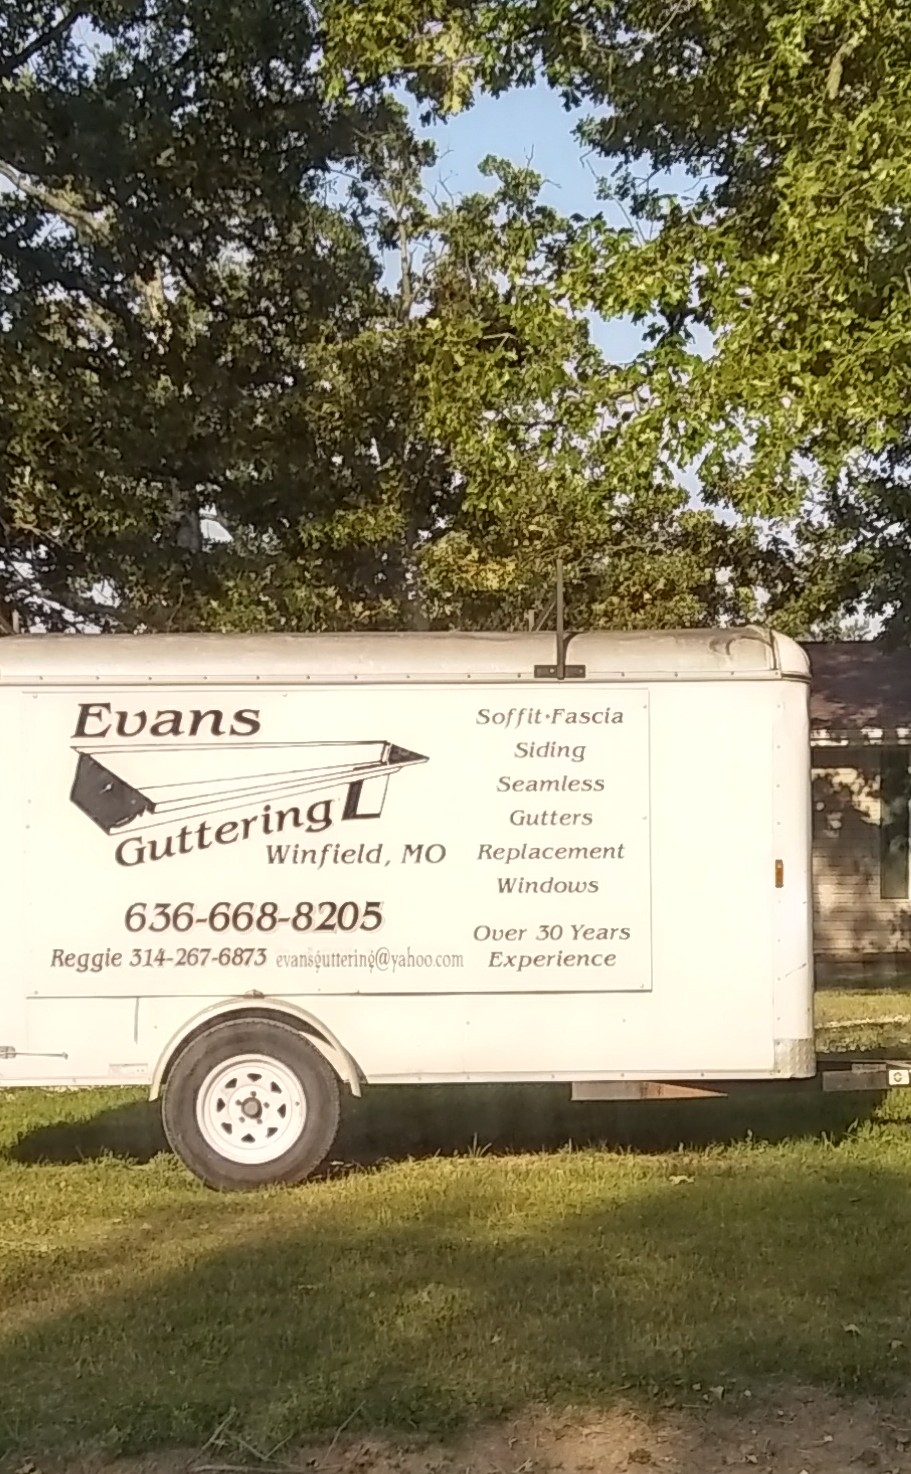 Evans Guttering 18 N Ethlyn Rd, Winfield Missouri 63389